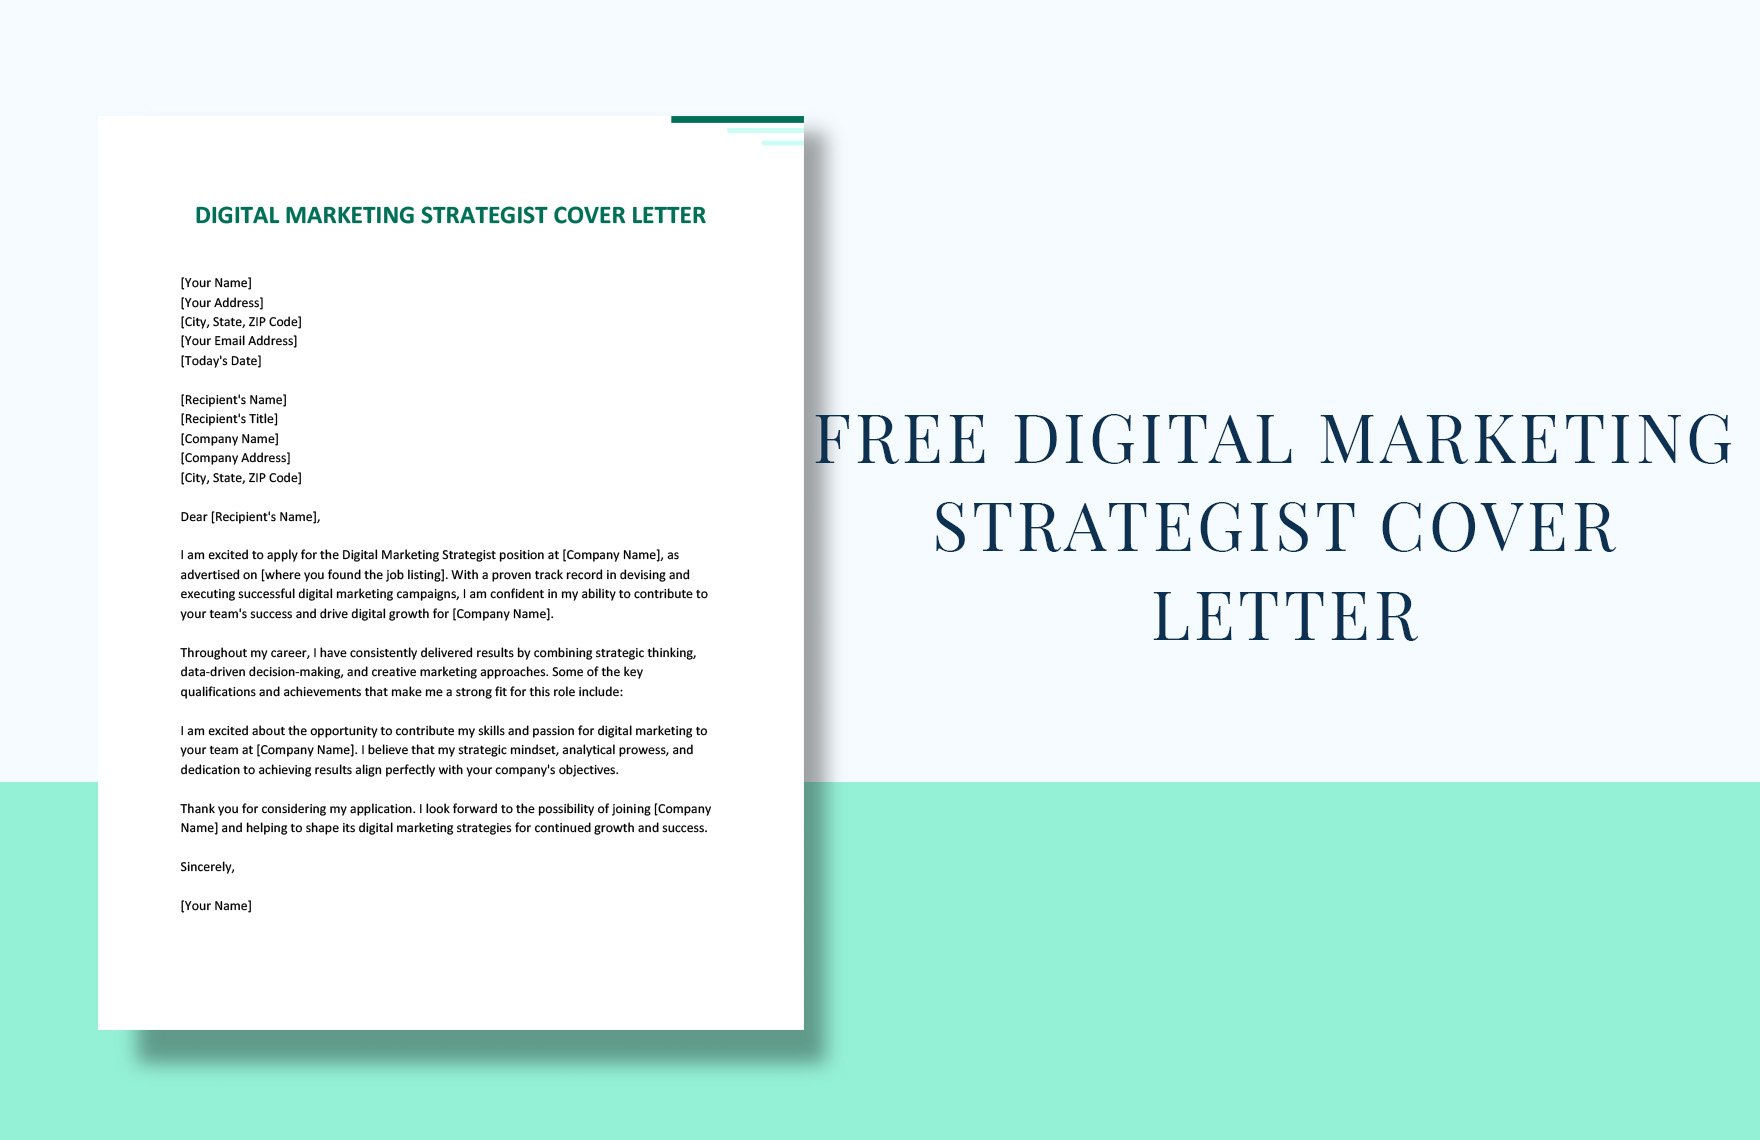 Digital Marketing Strategist Cover Letter in Word, Google Docs